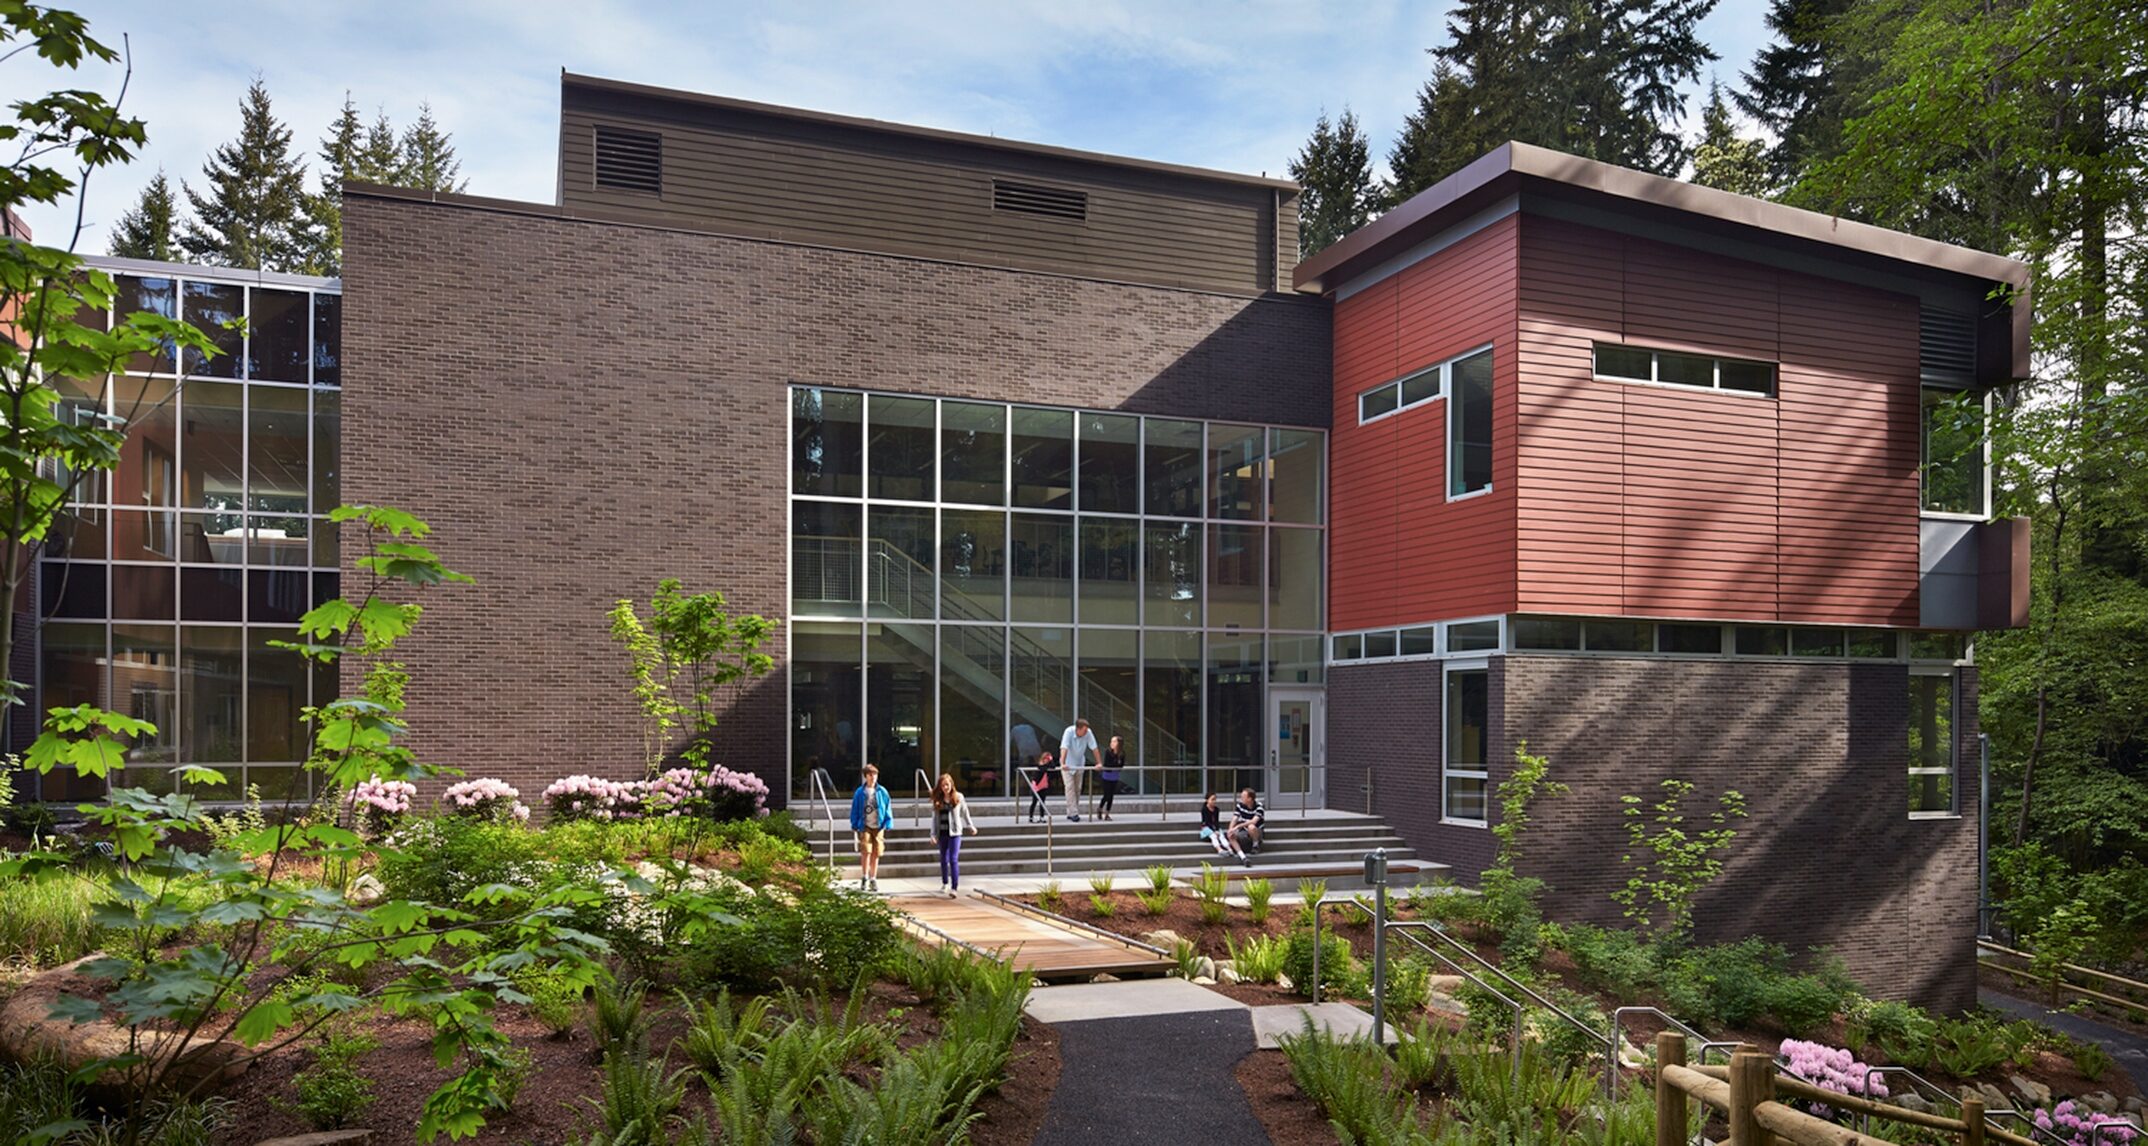 Landscaped environment at Cherry Crest Elementary School, Bellevue WA - NAC Architecture